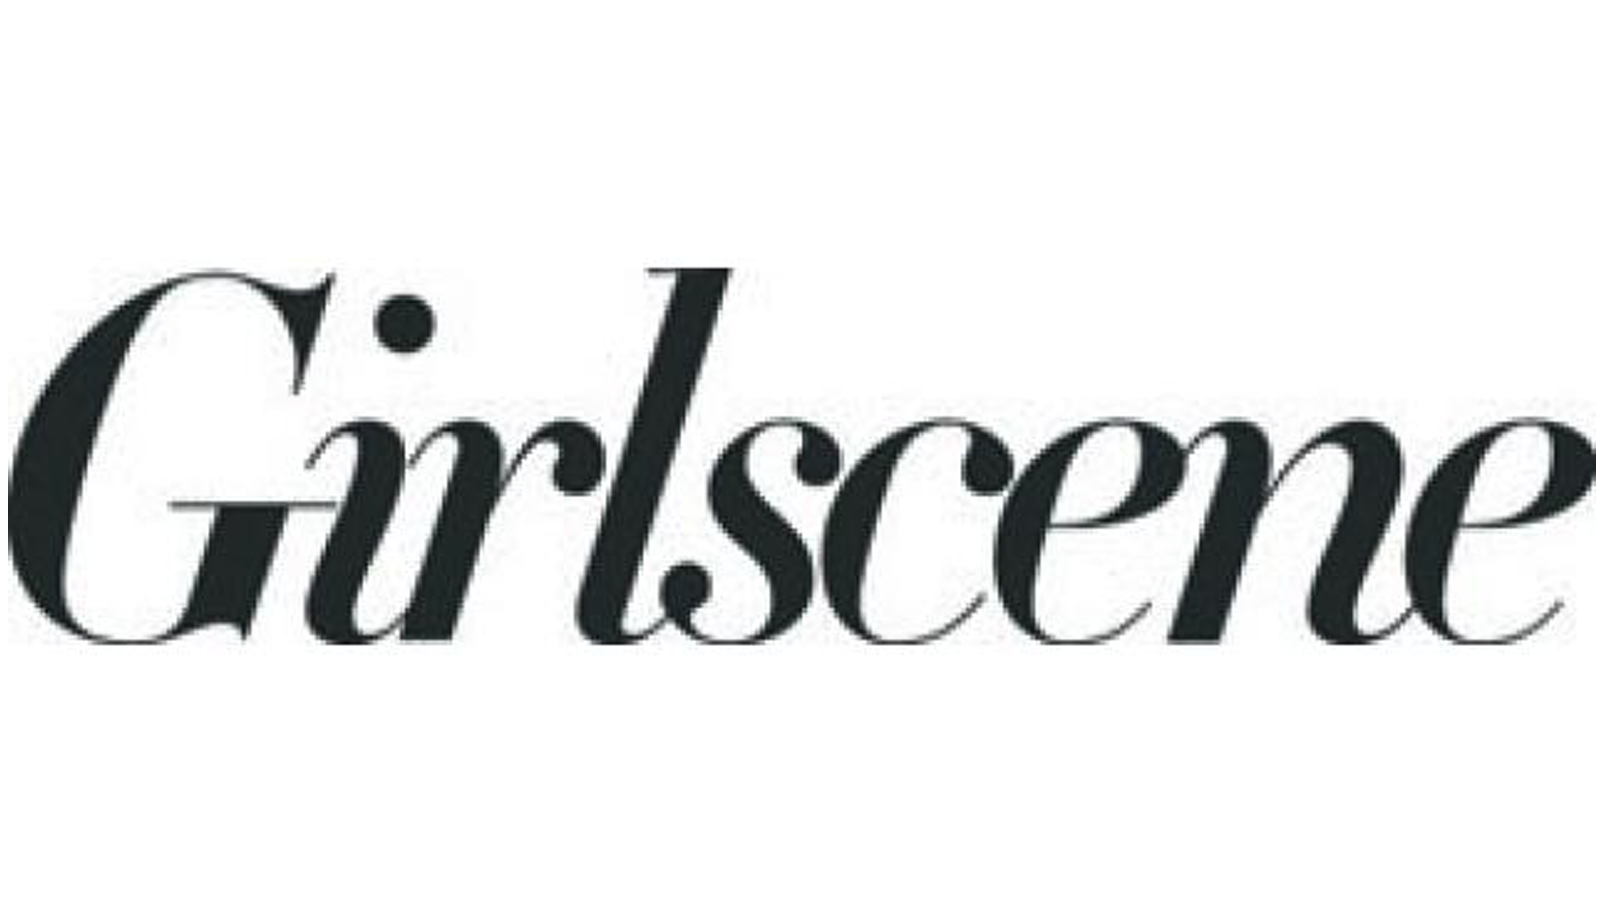 Logo Girlscene.png